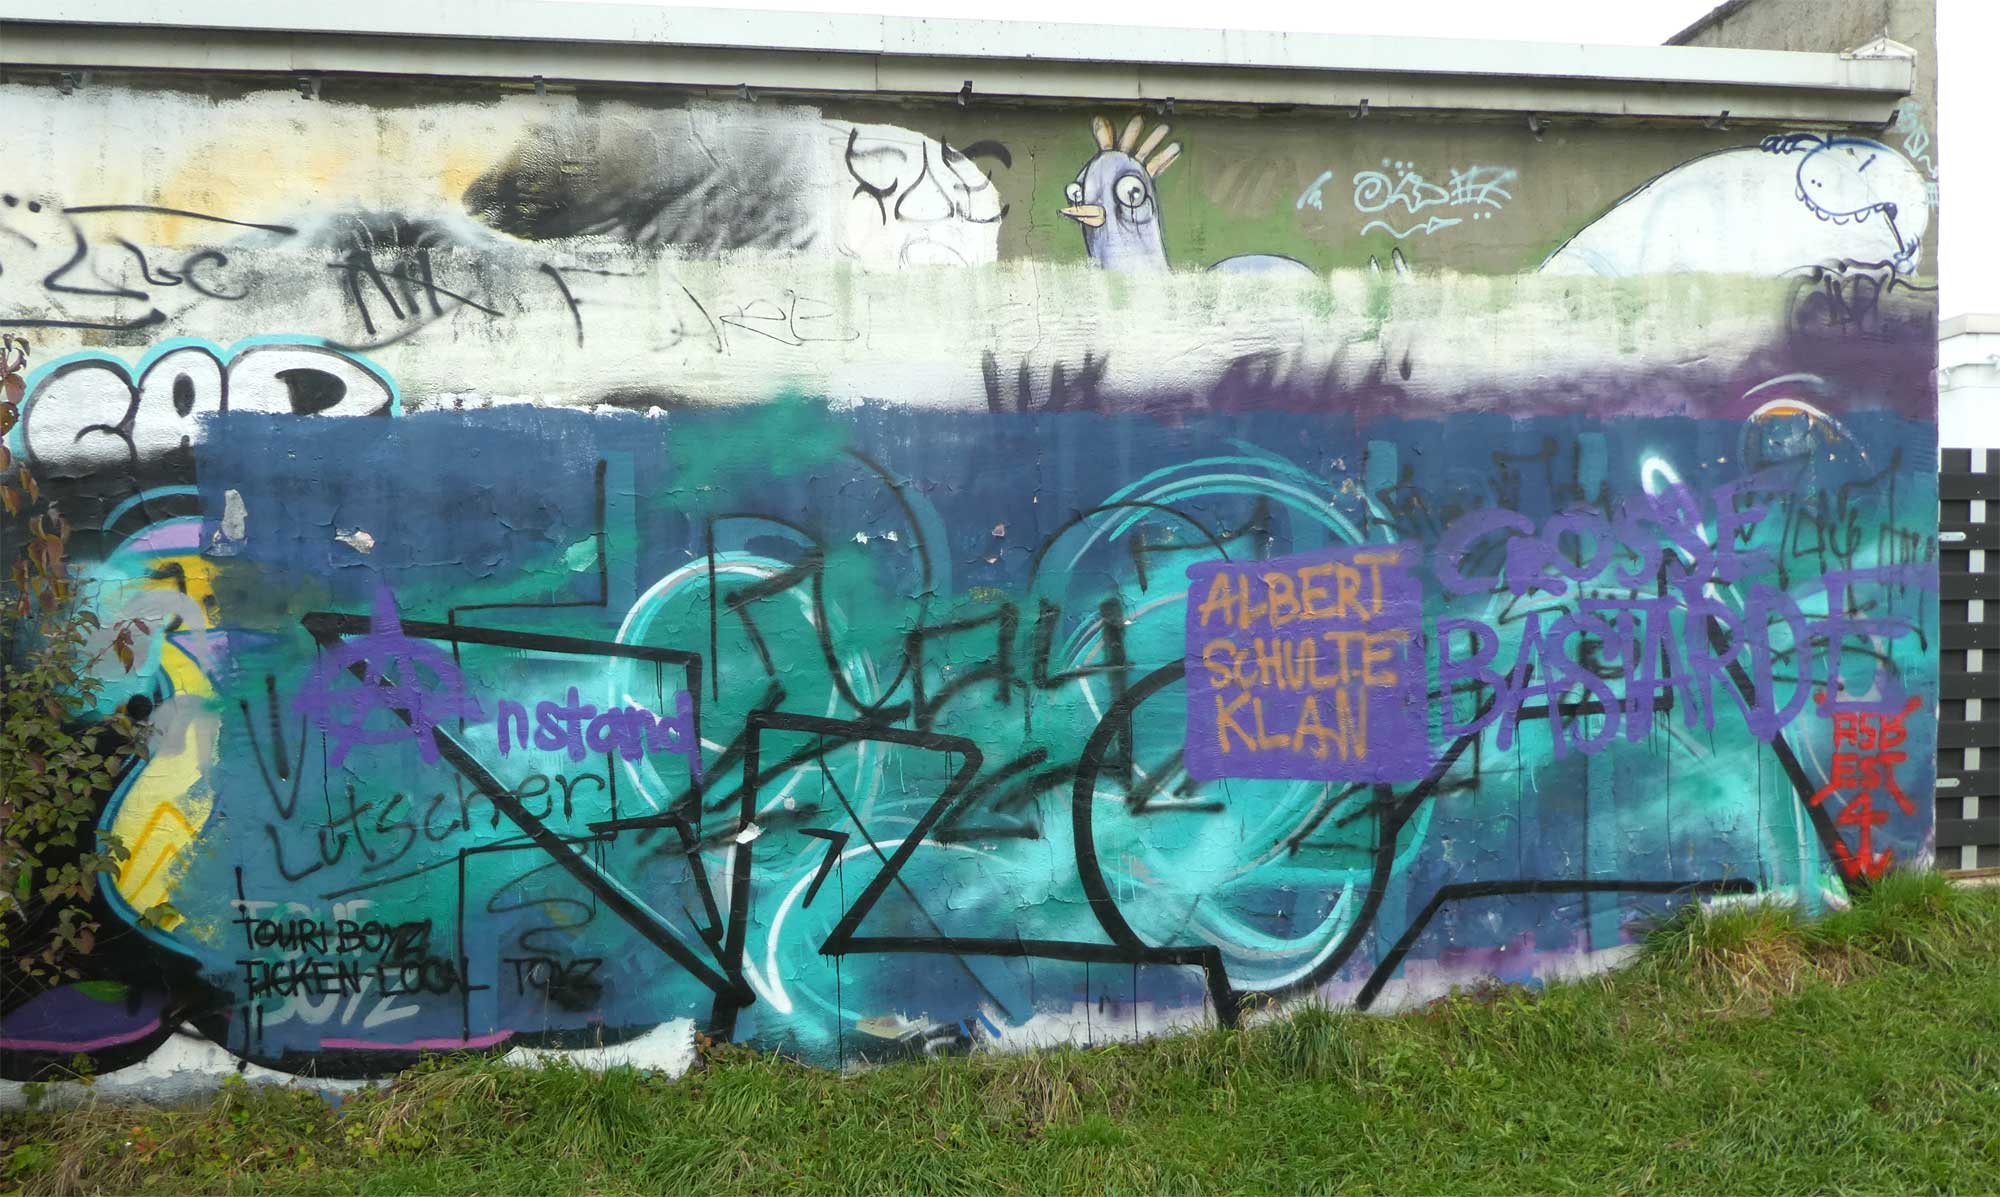 Graffiti Worms Hof November 2020